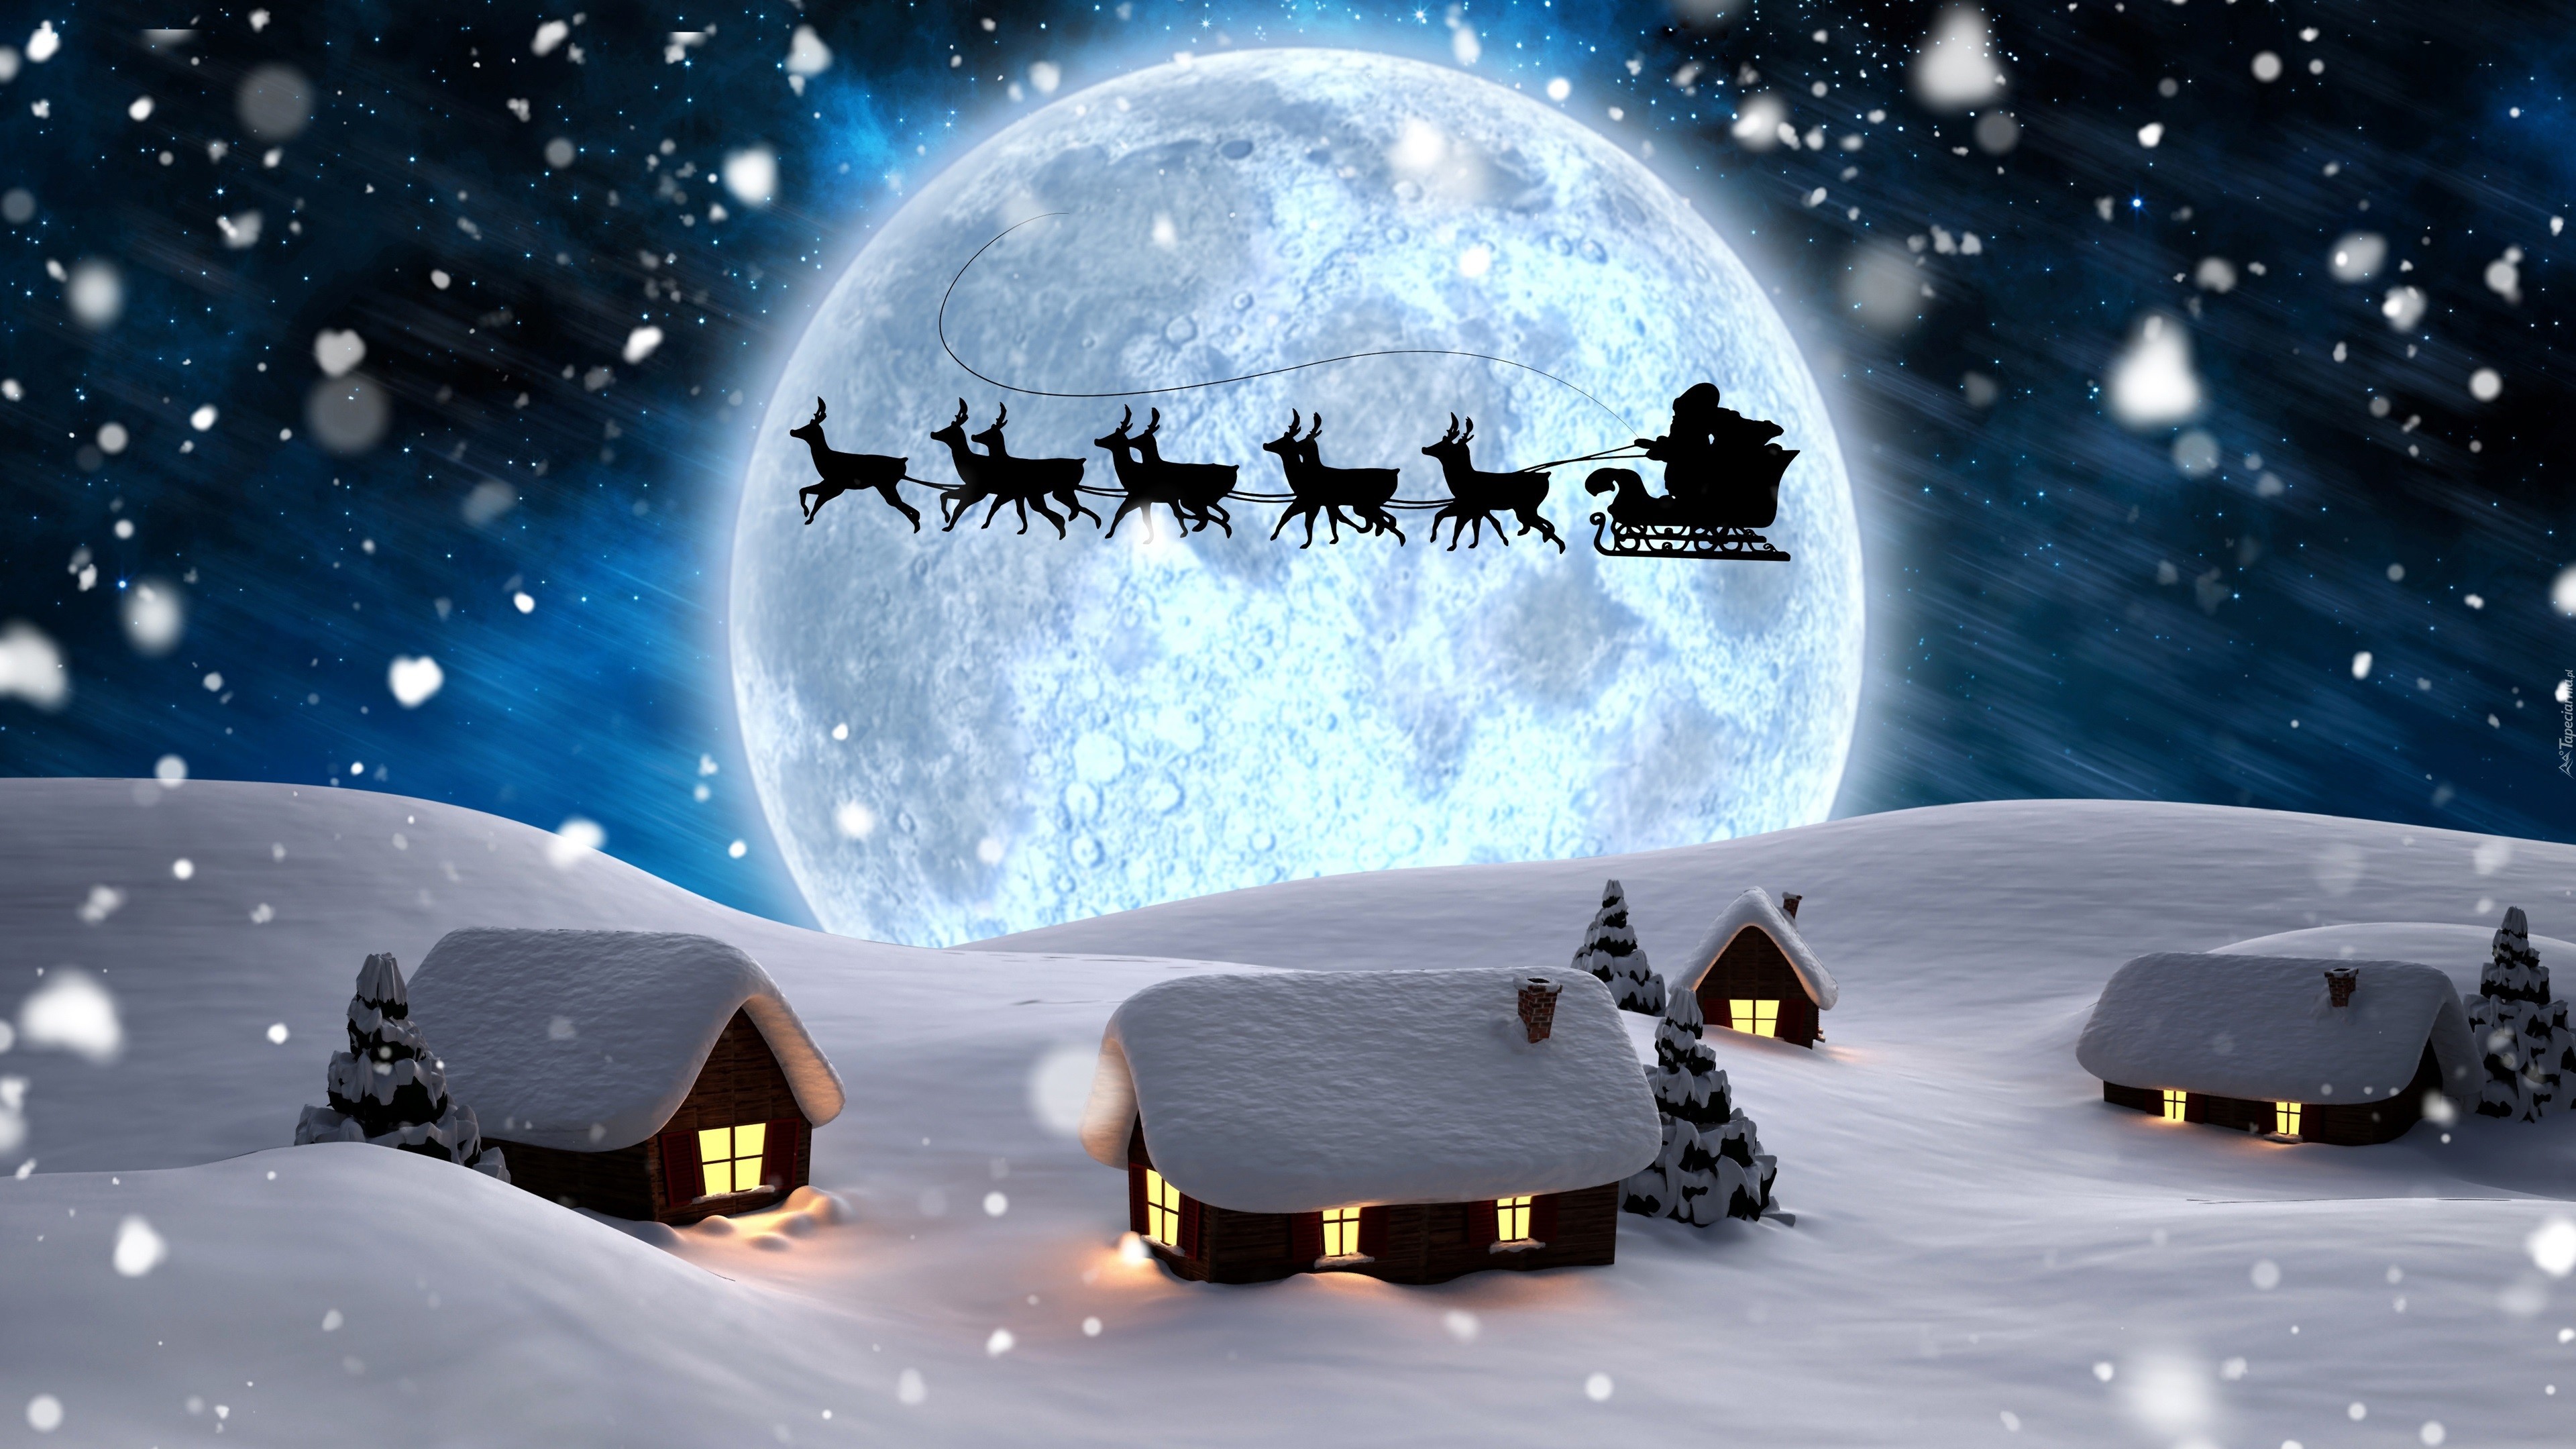 3840x2160 Santa on Sleigh Flying Over Christmas Village Wallpaper